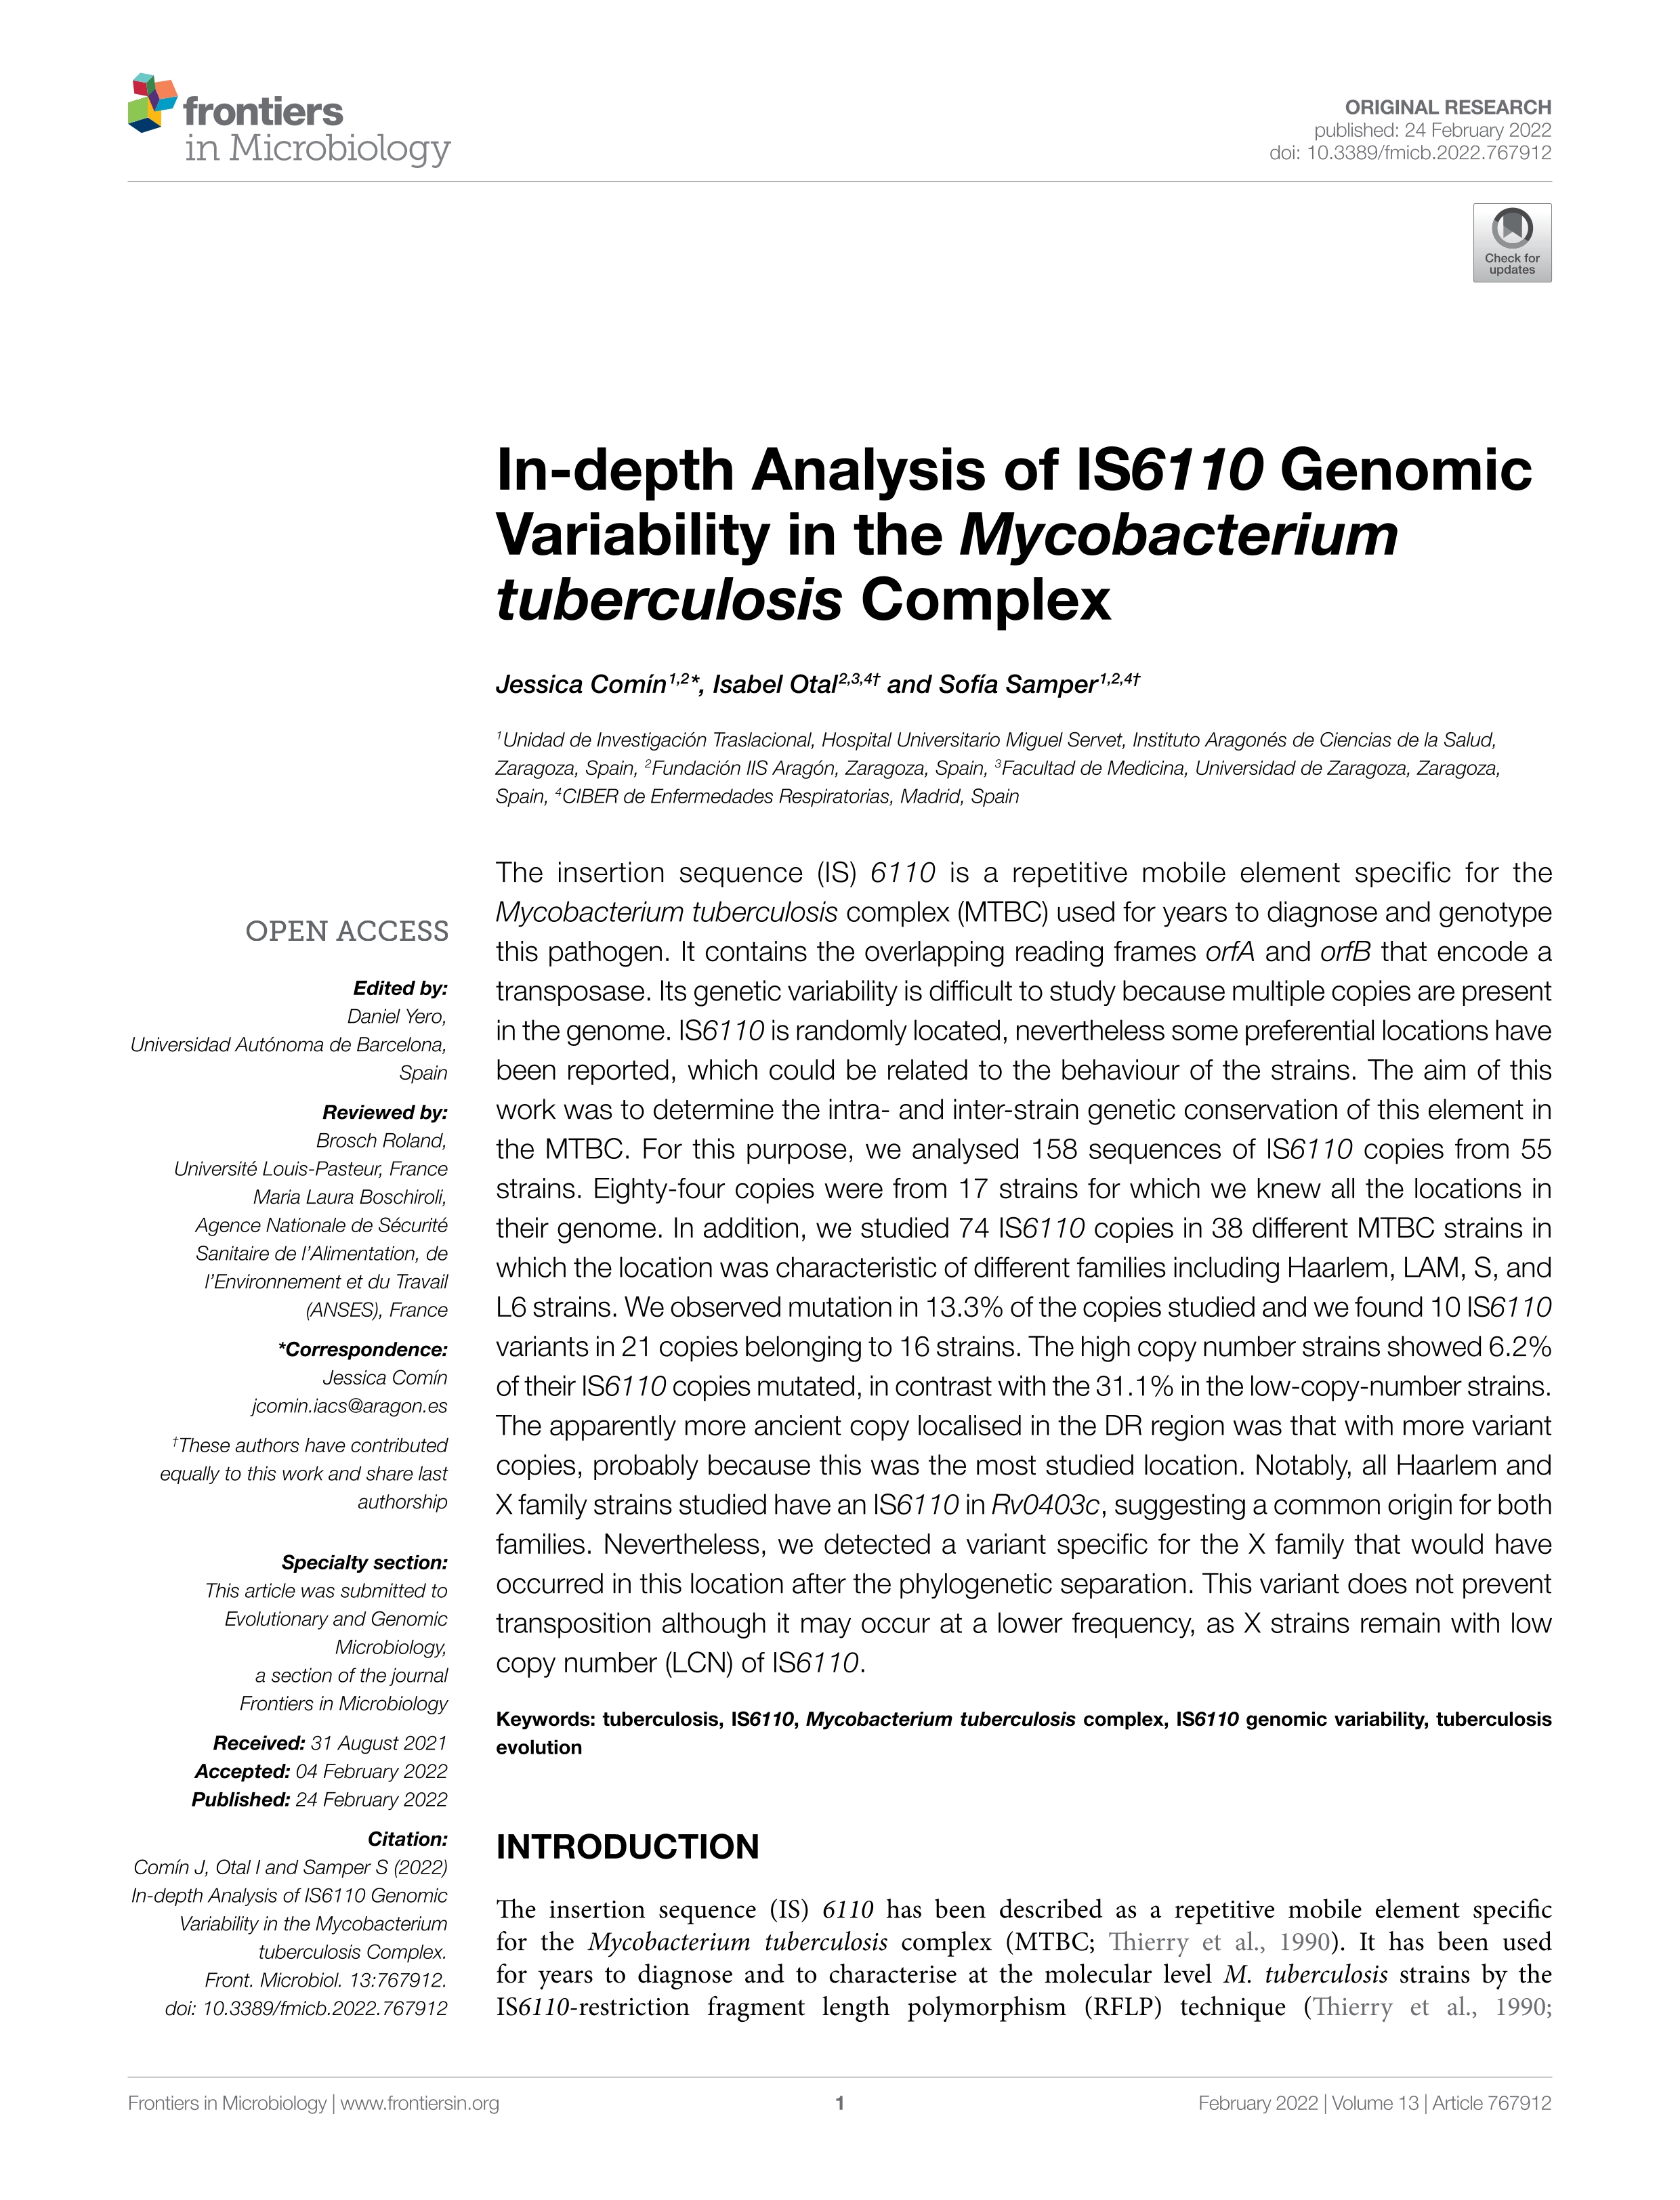 In-depth Analysis of IS6110 Genomic Variability in the Mycobacterium tuberculosis Complex